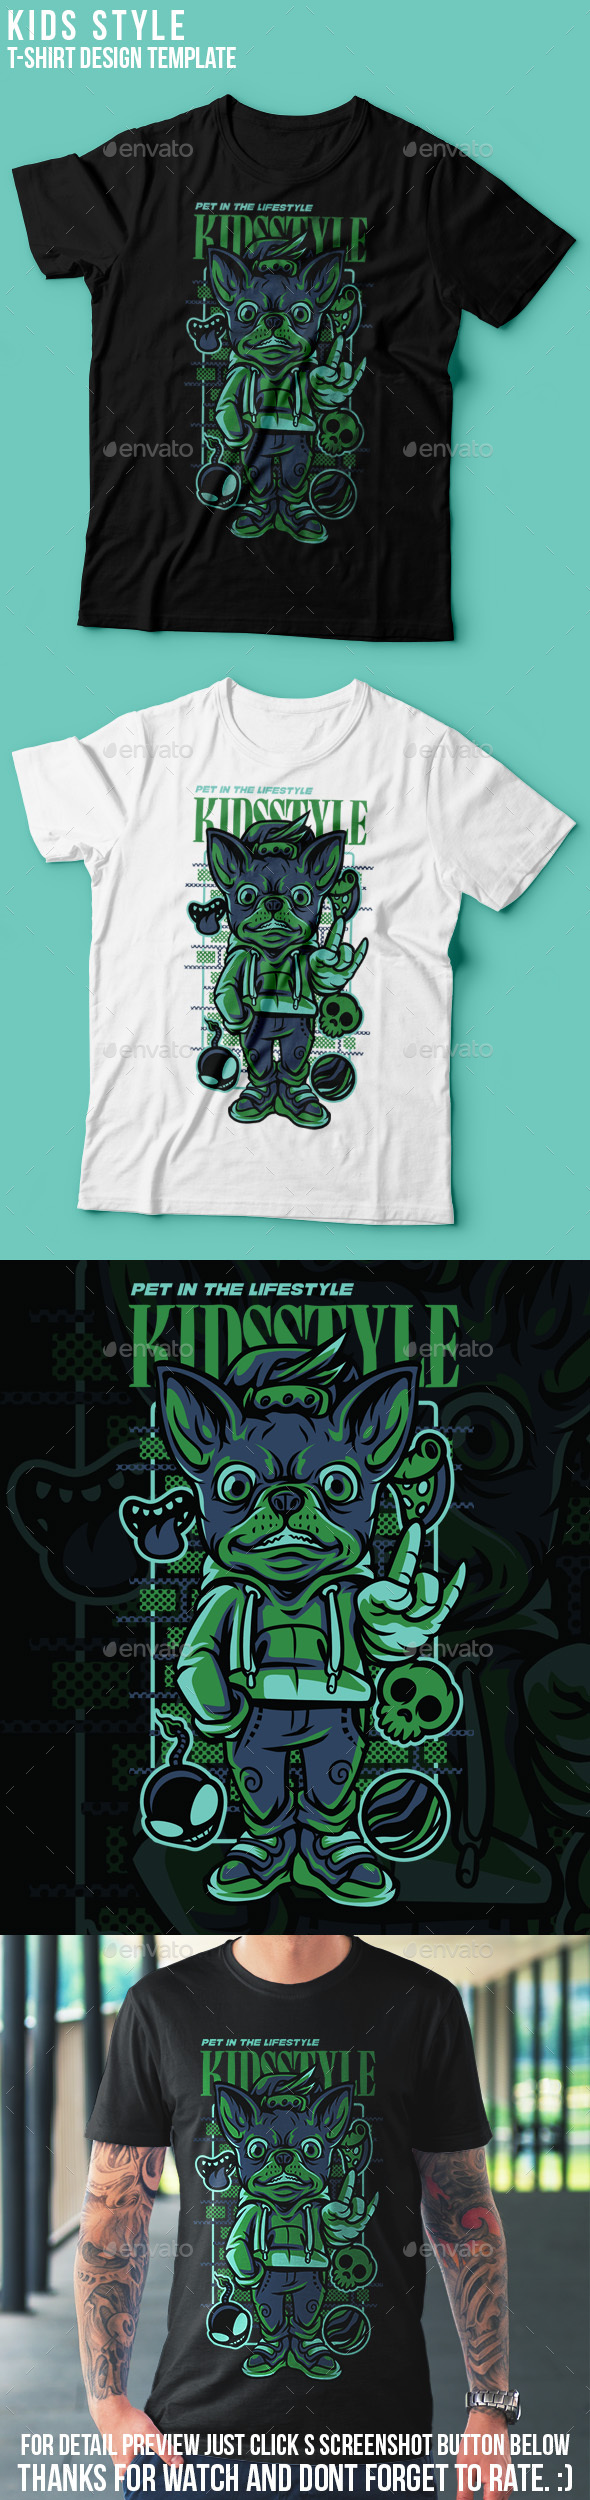 [DOWNLOAD]Kids Style T-Shirt Design